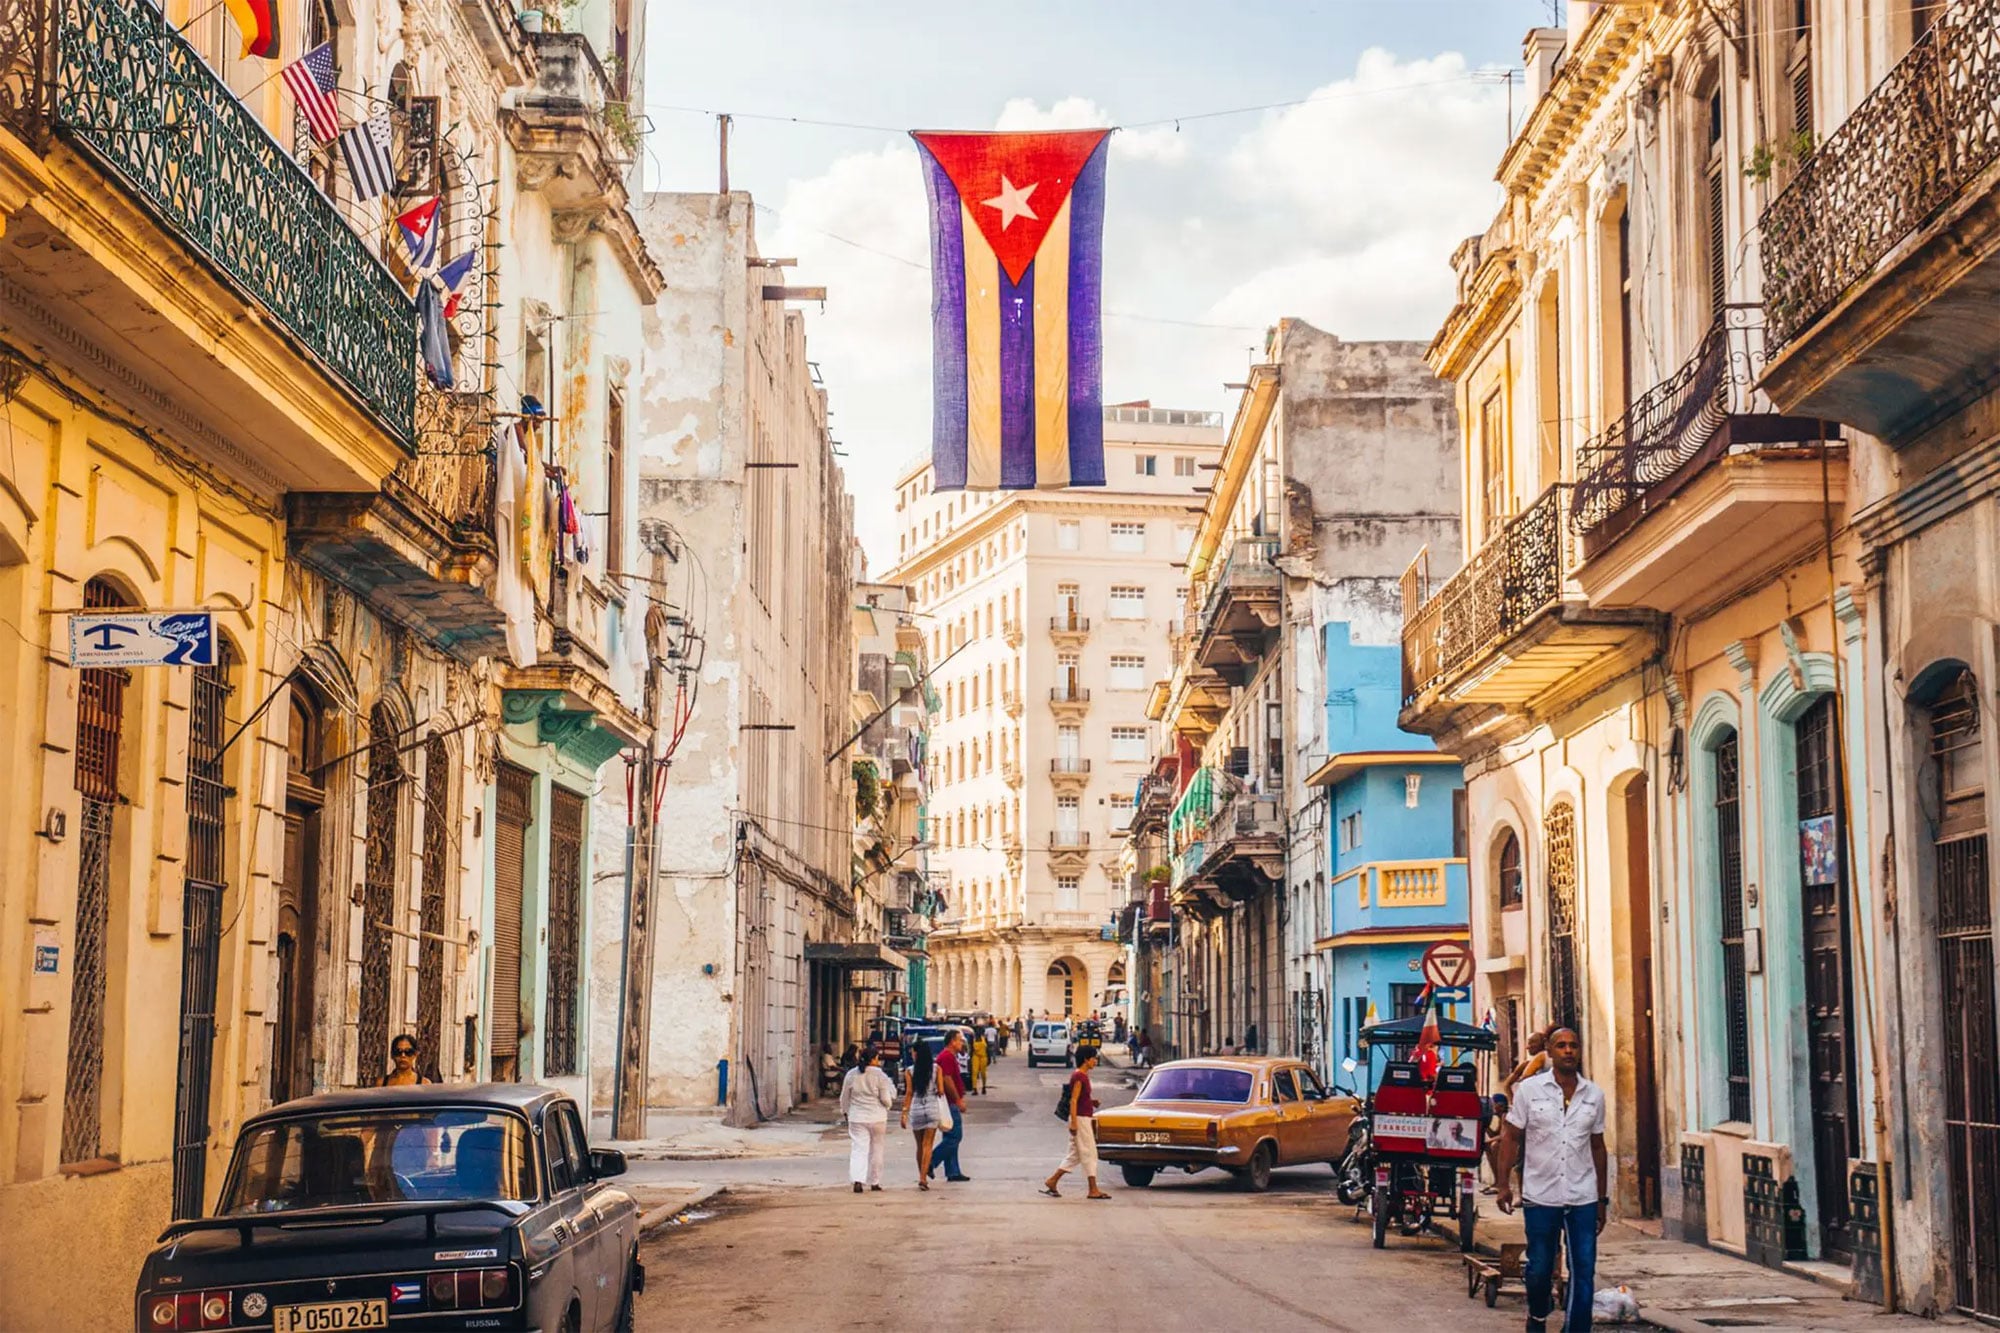 Cuba Travel